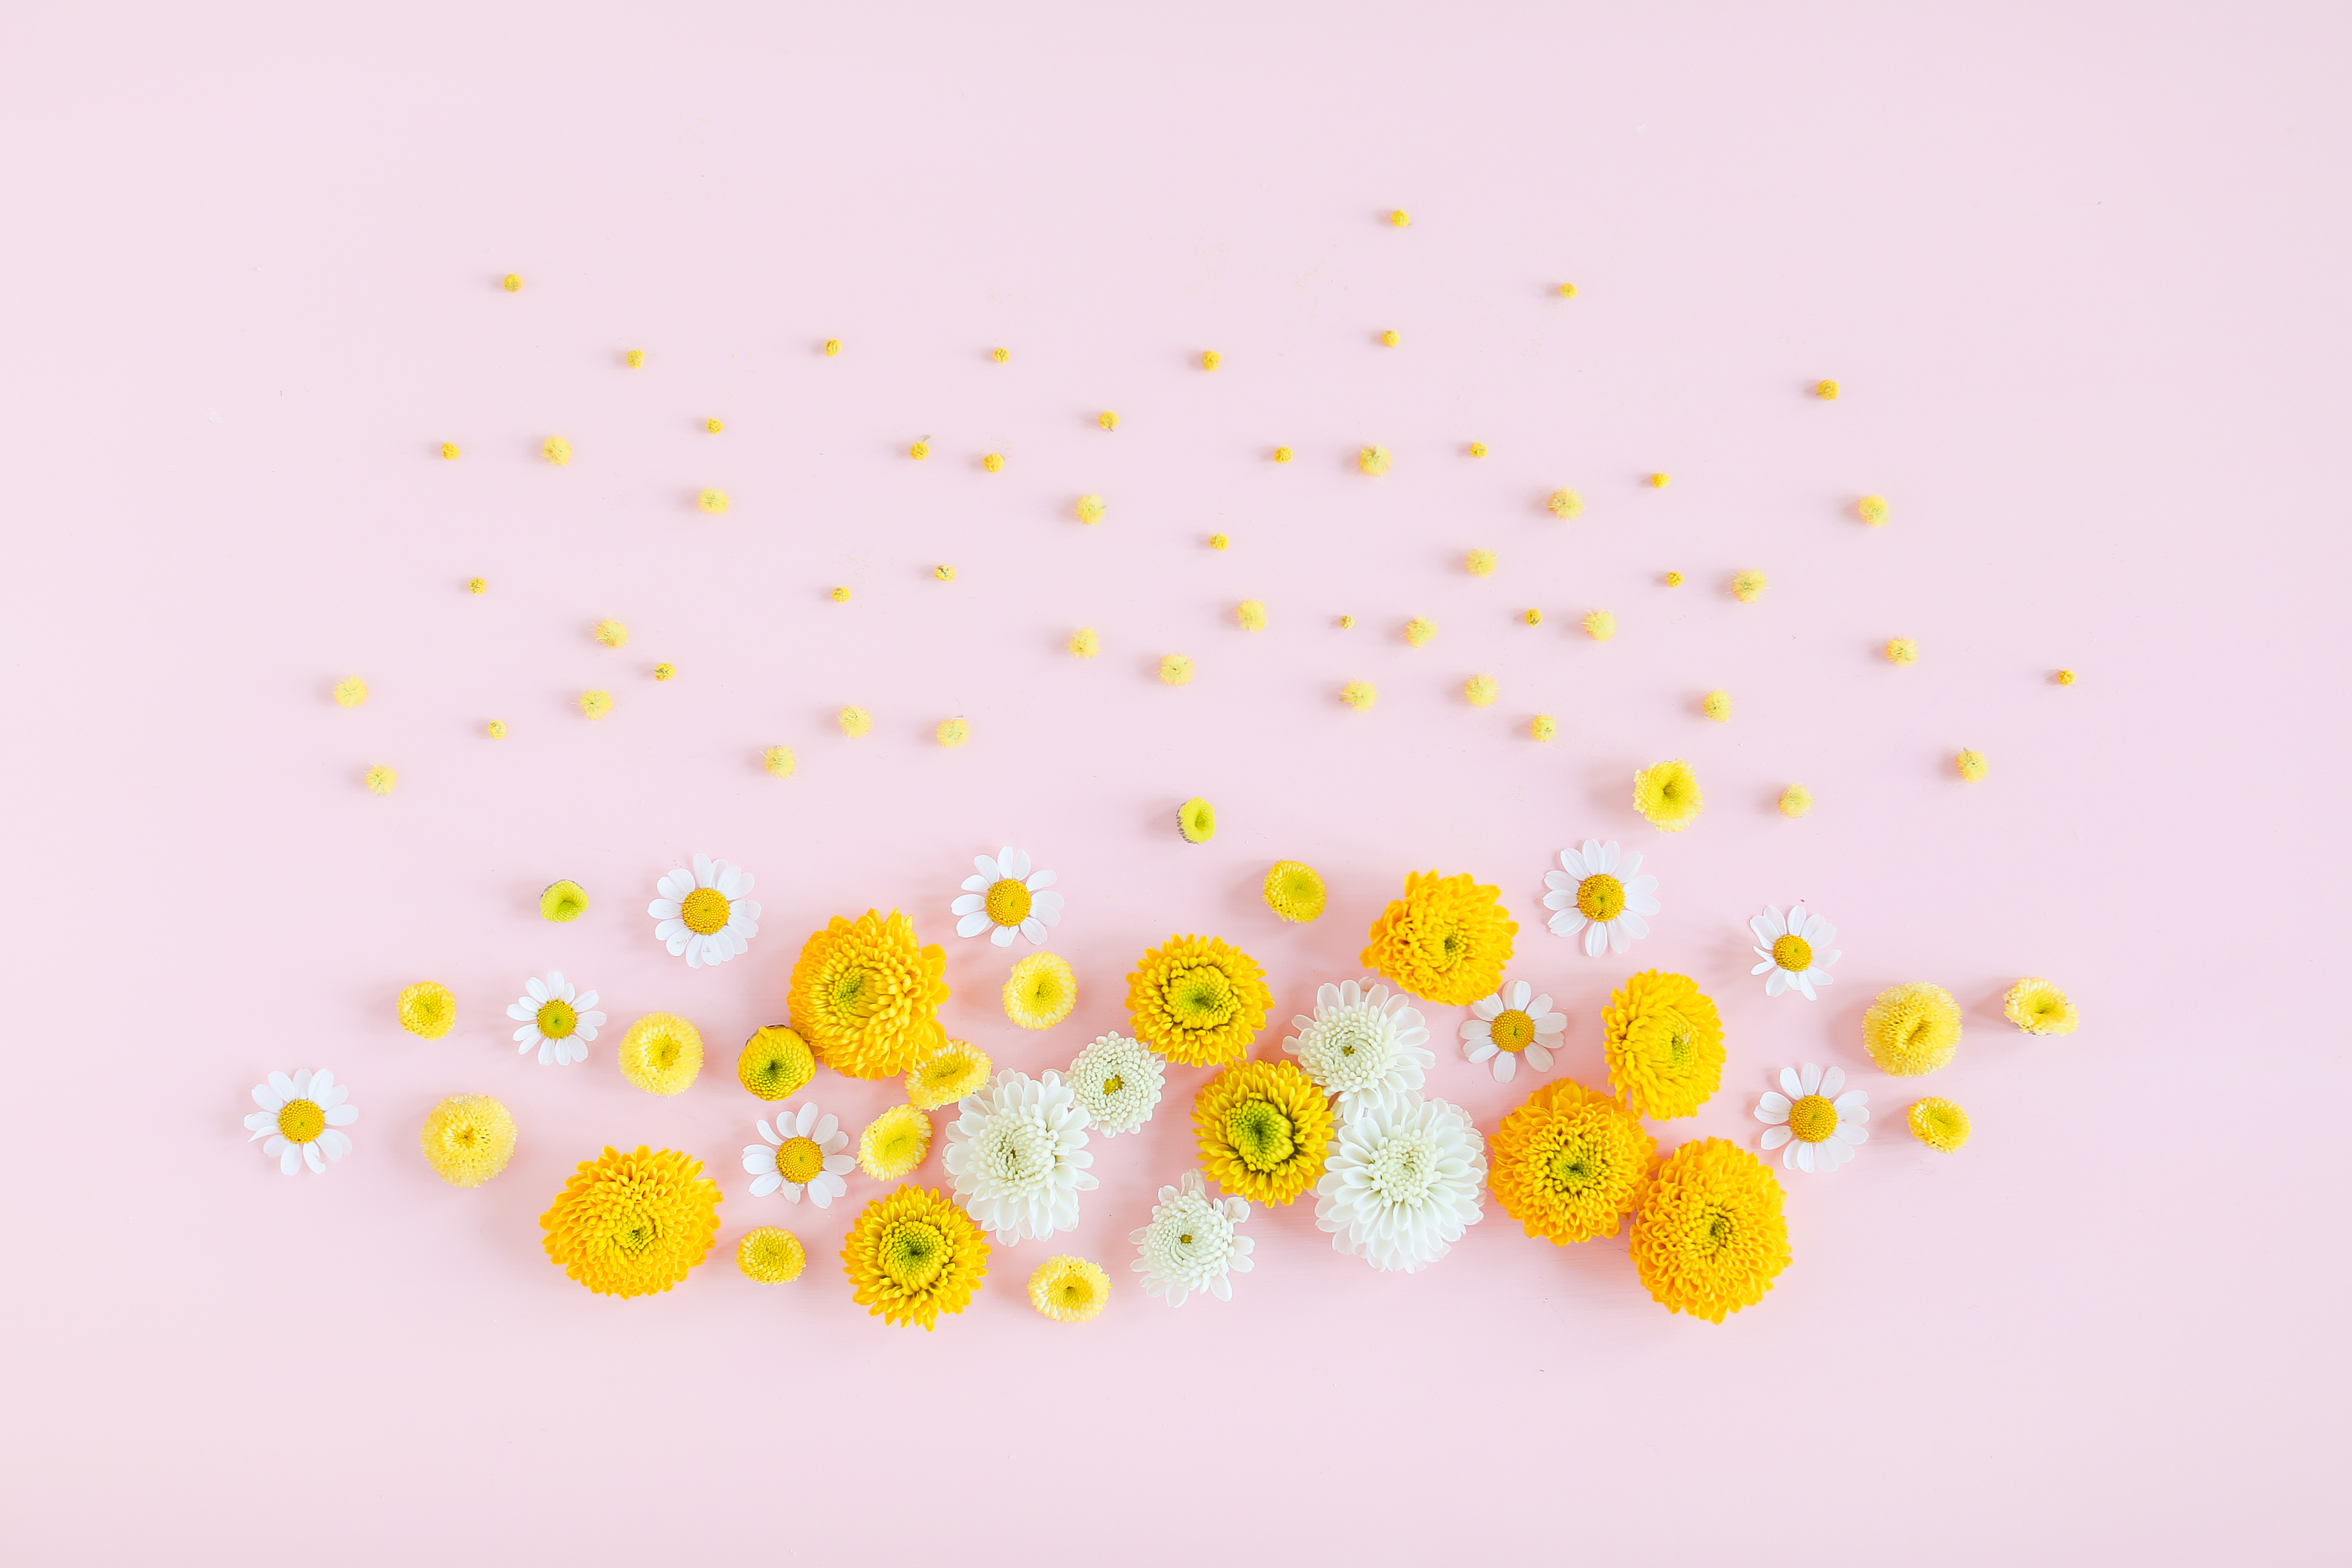 Digital Blooms May 2018 | Free Pantone Inspired Desktop Wallpapers for Spring | Free Pastel Tech Wallpapers | Design 2 // JustineCelina.com x Rebecca Dawn Design